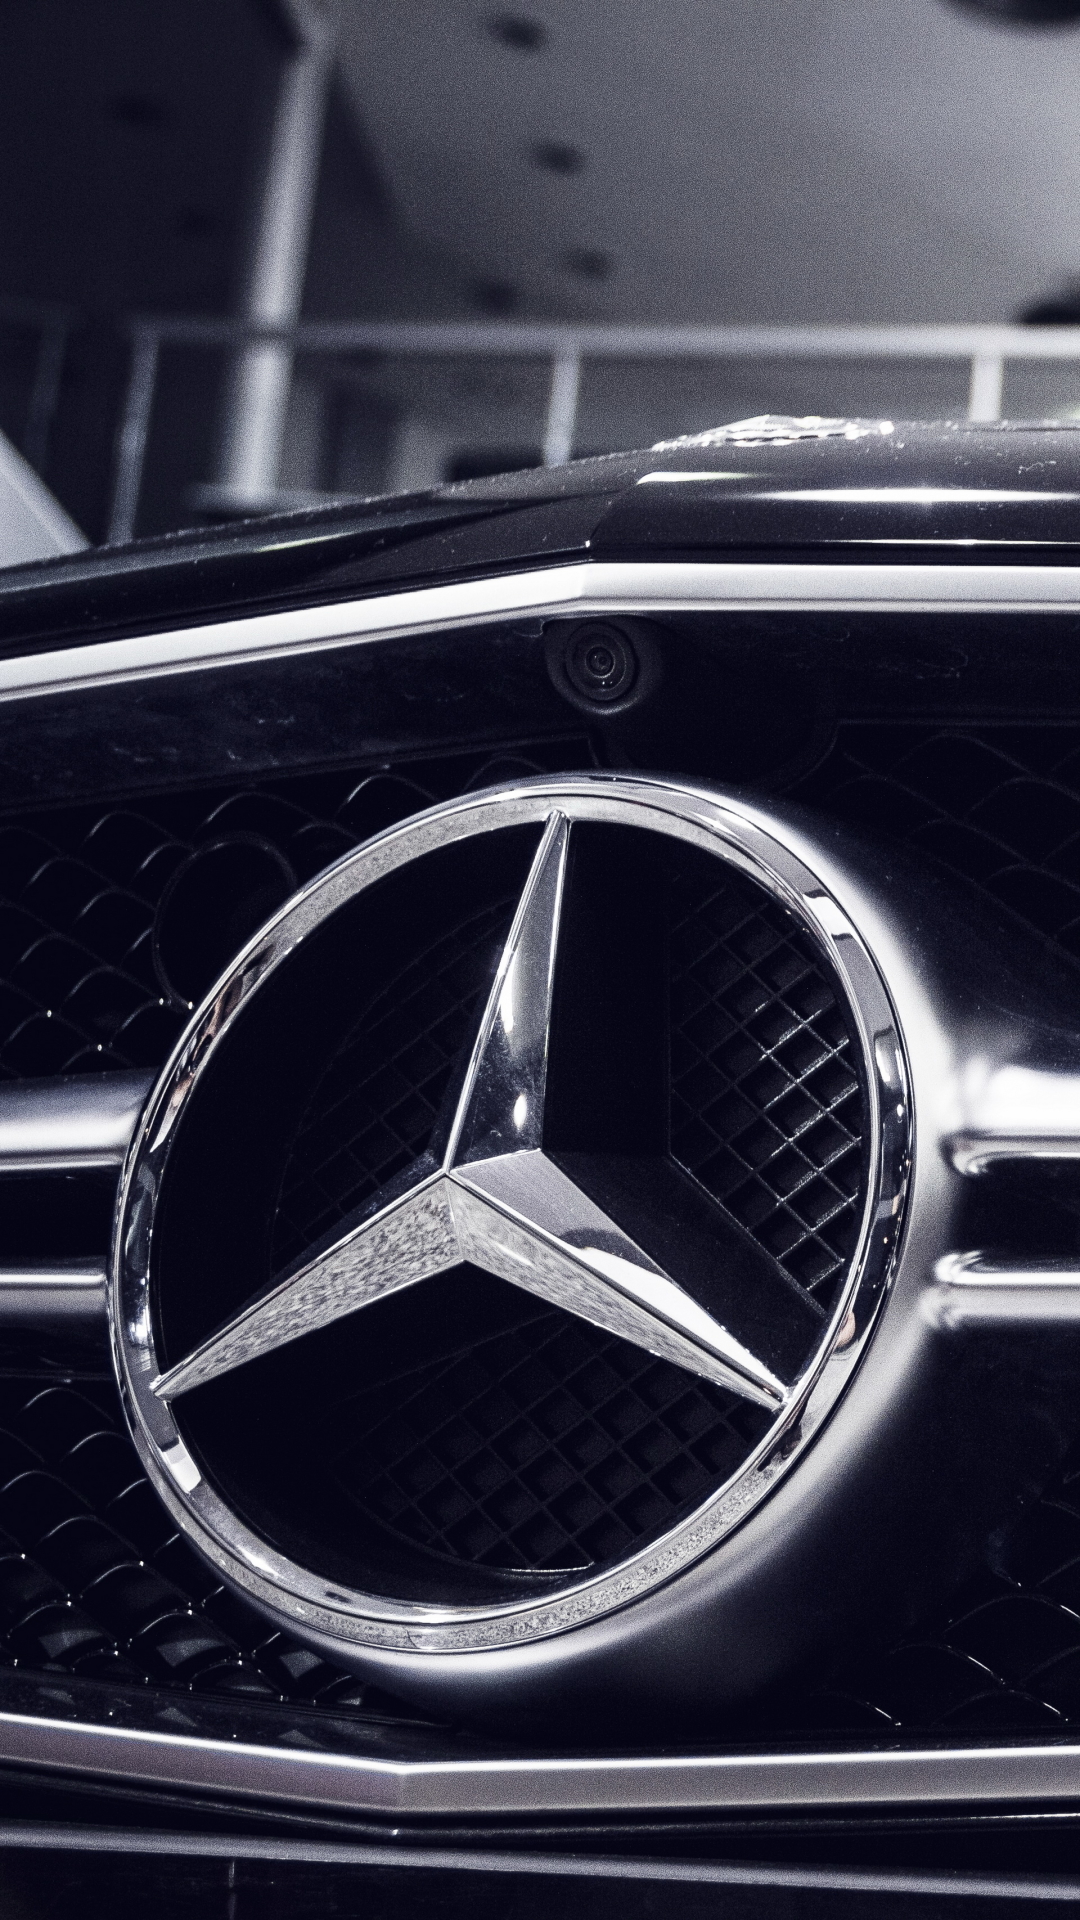 Скачати мобільні шпалери Mercedes Benz, Транспортні Засоби, Mercedes Benz S63 Amg безкоштовно.